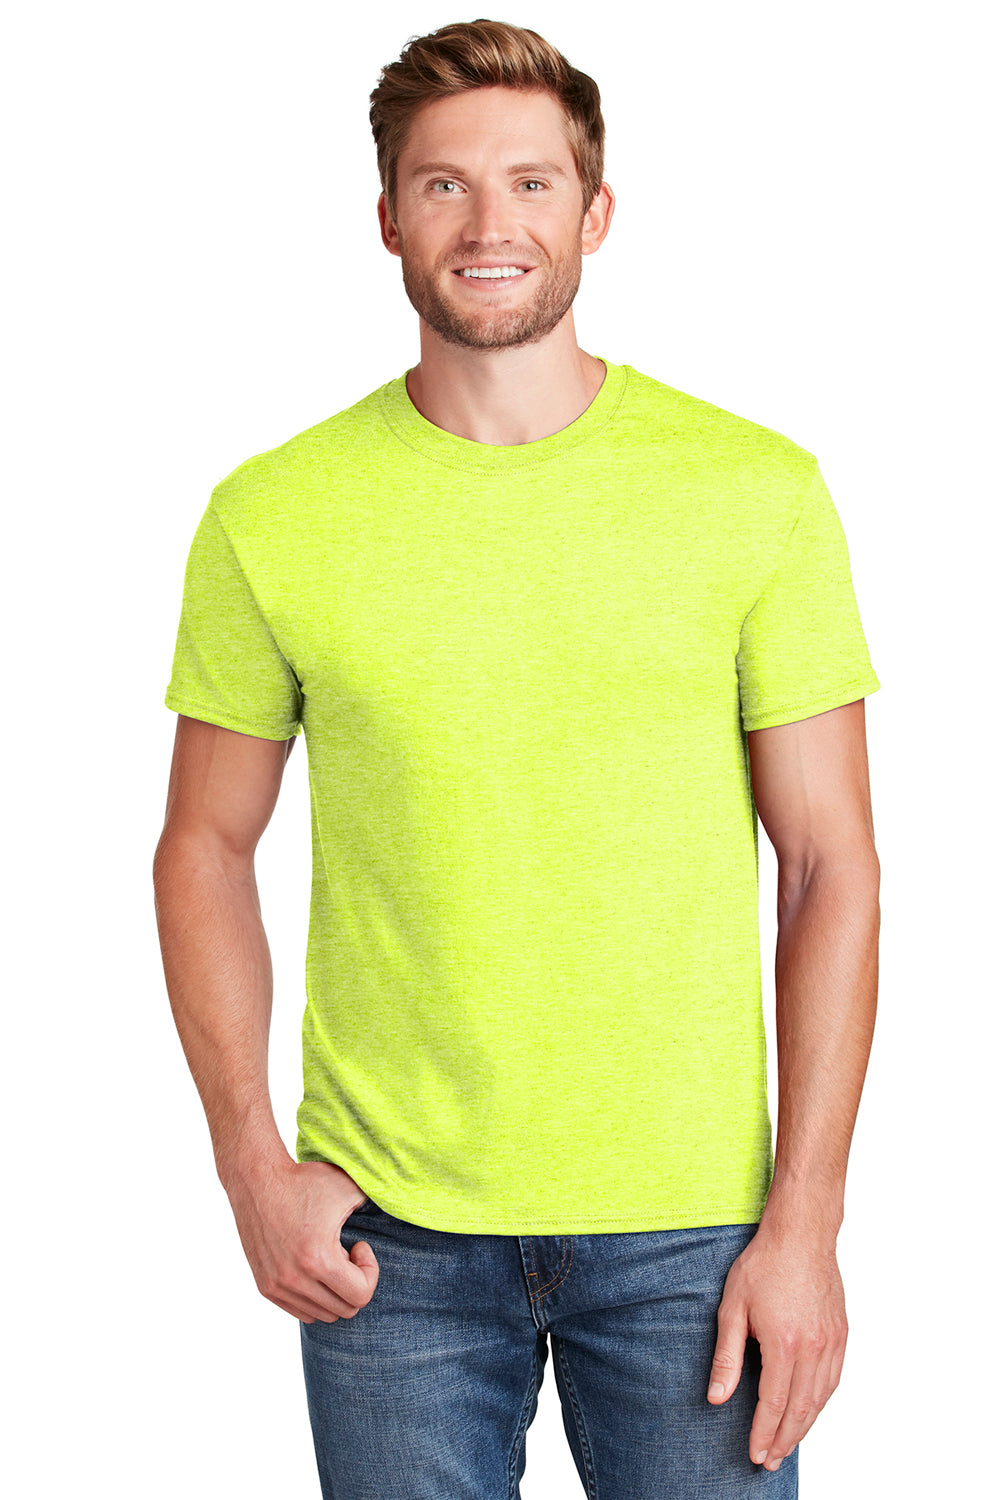 Hanes P4200 Mens X-Temp Moisture Wicking Short Sleeve Crewneck T-Shirt Heather Neon Lemon Yellow Front